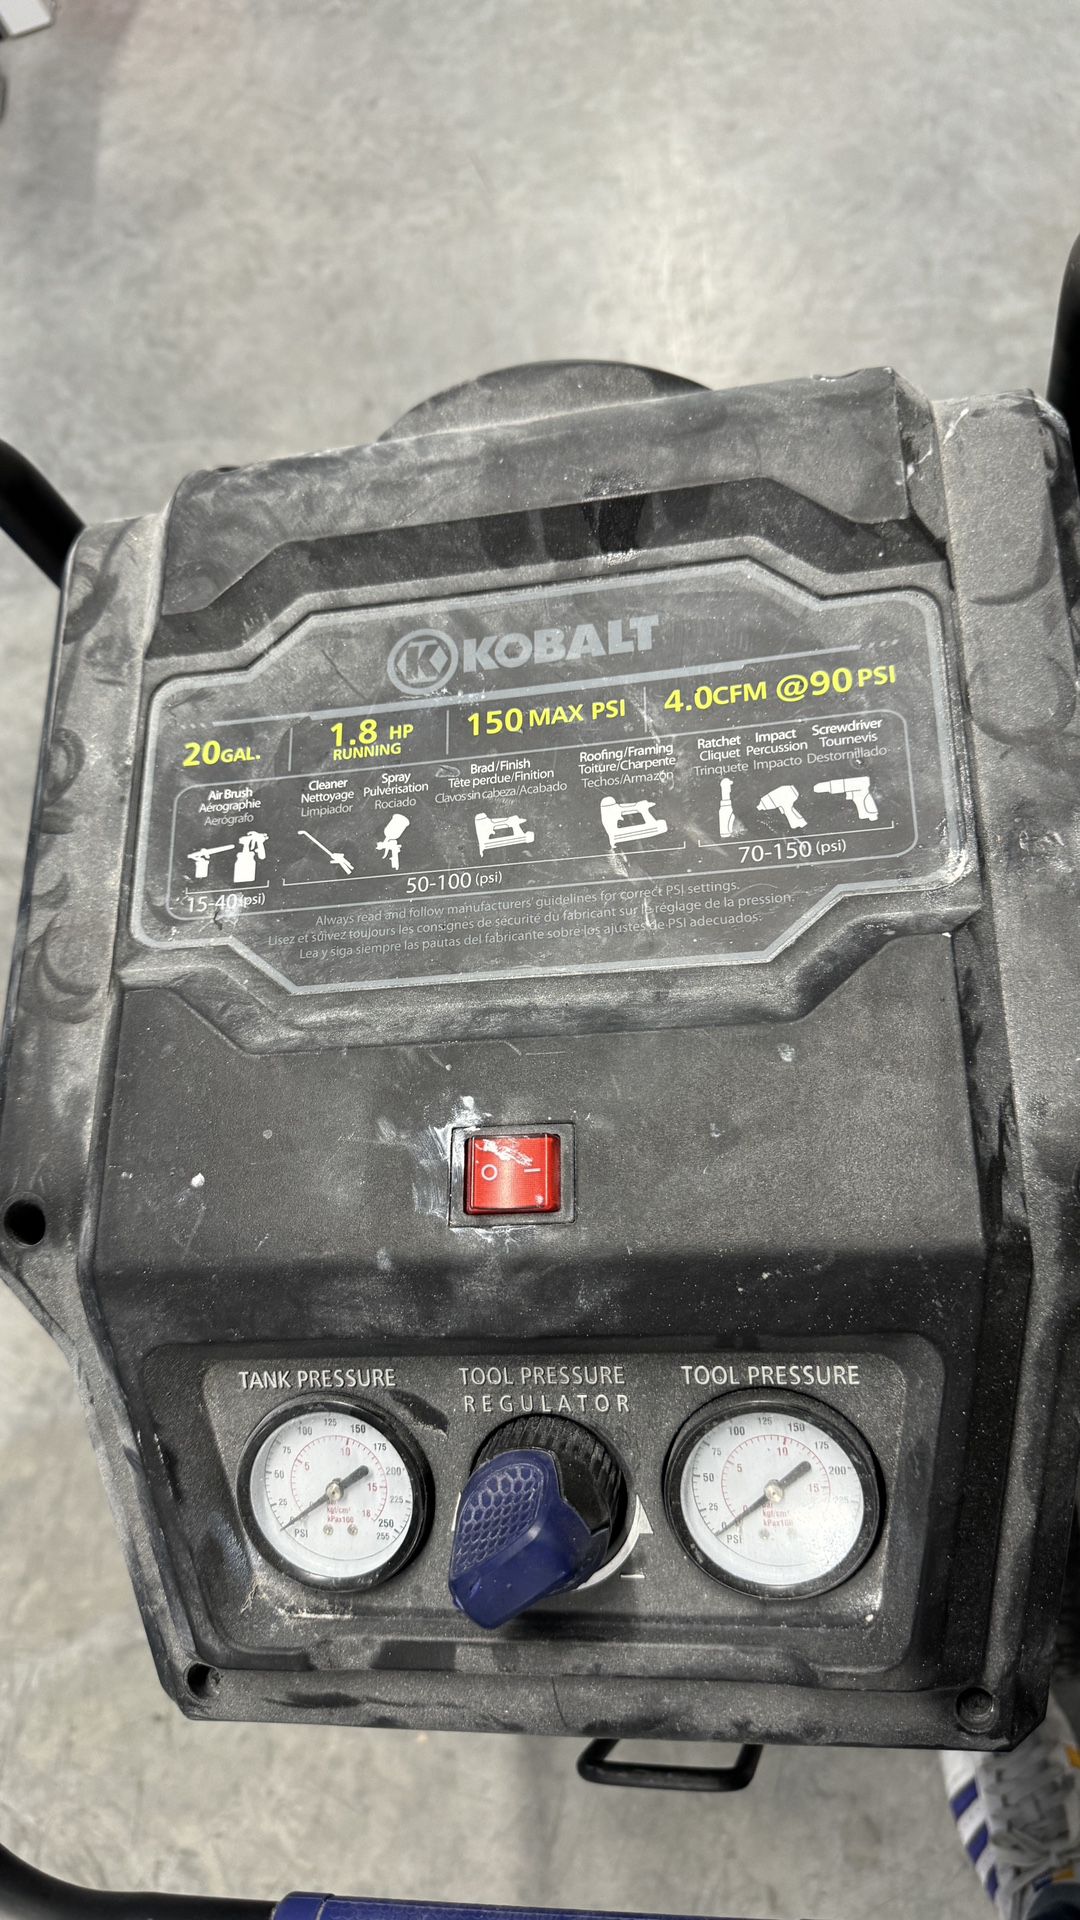 Kobalt Compressor 20 Gal. 